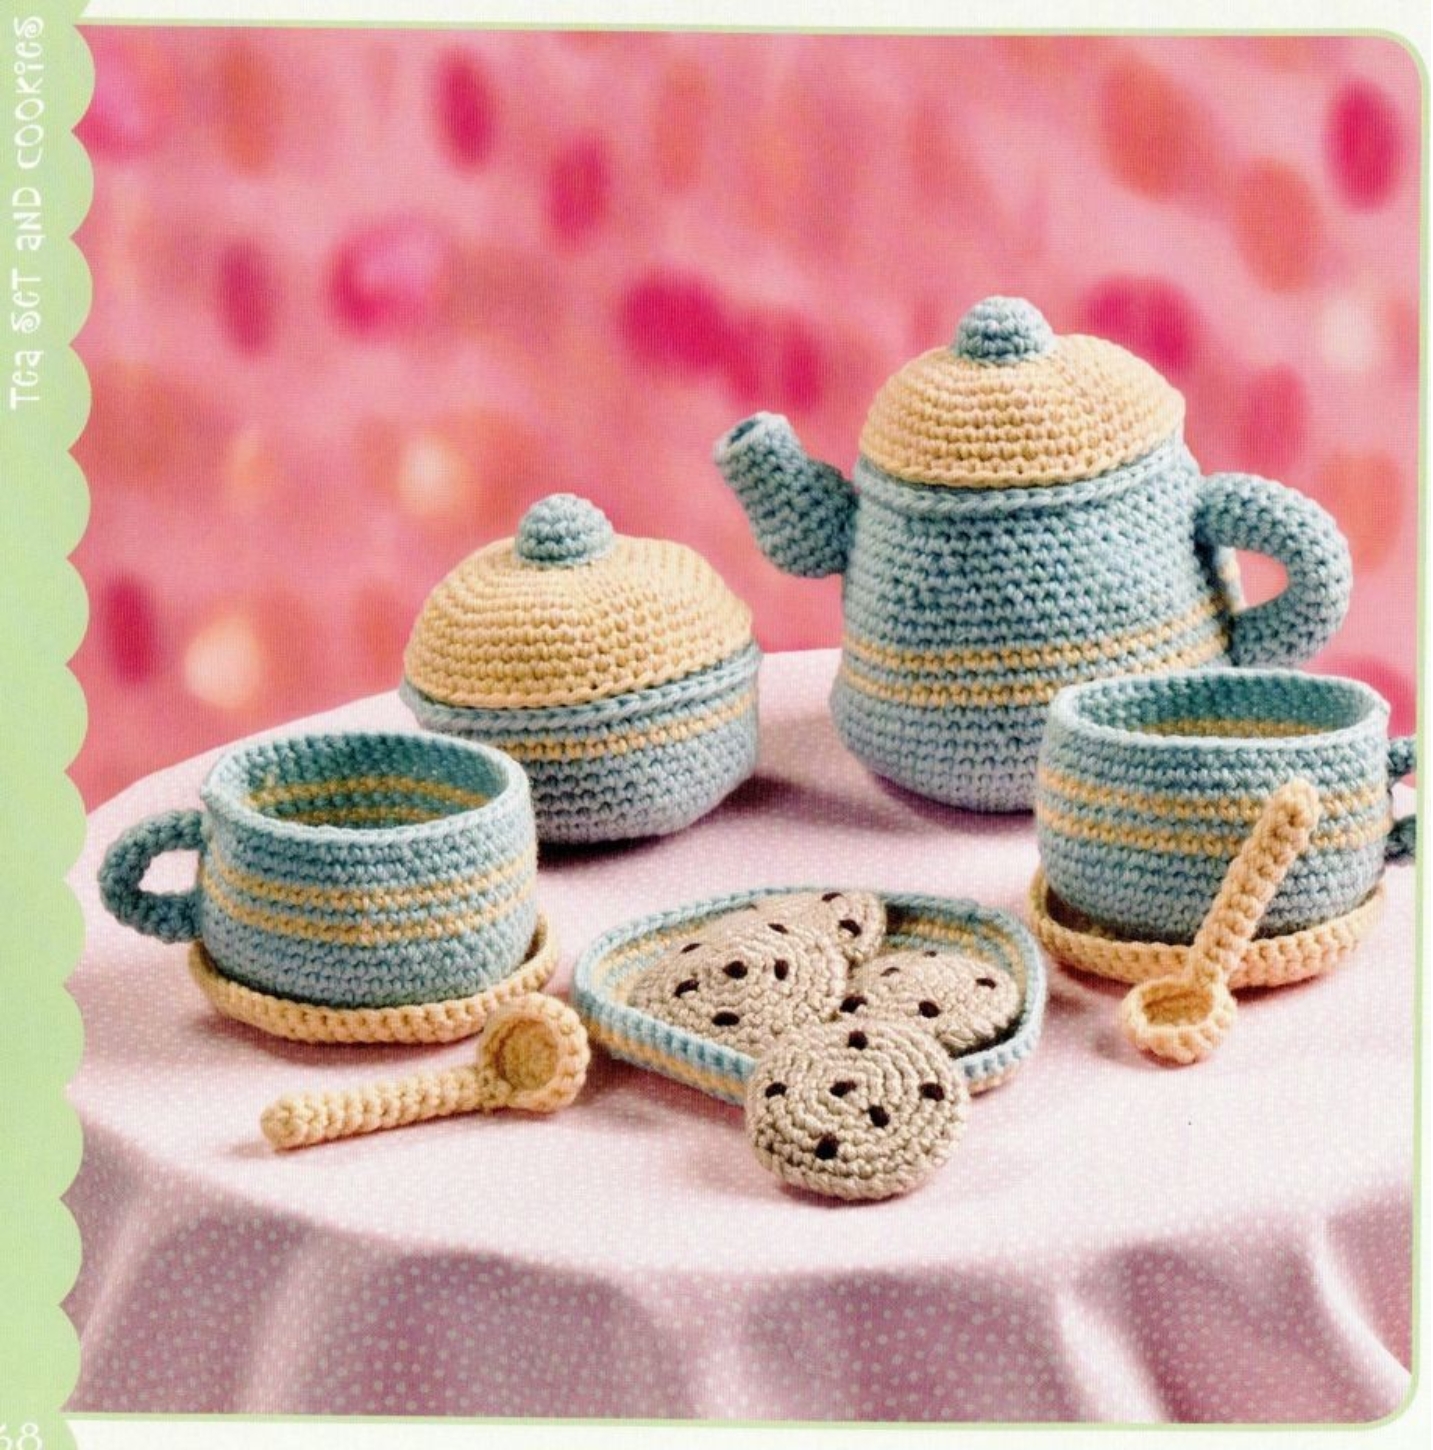 Tea with biscuits amigurumi pattern (2)